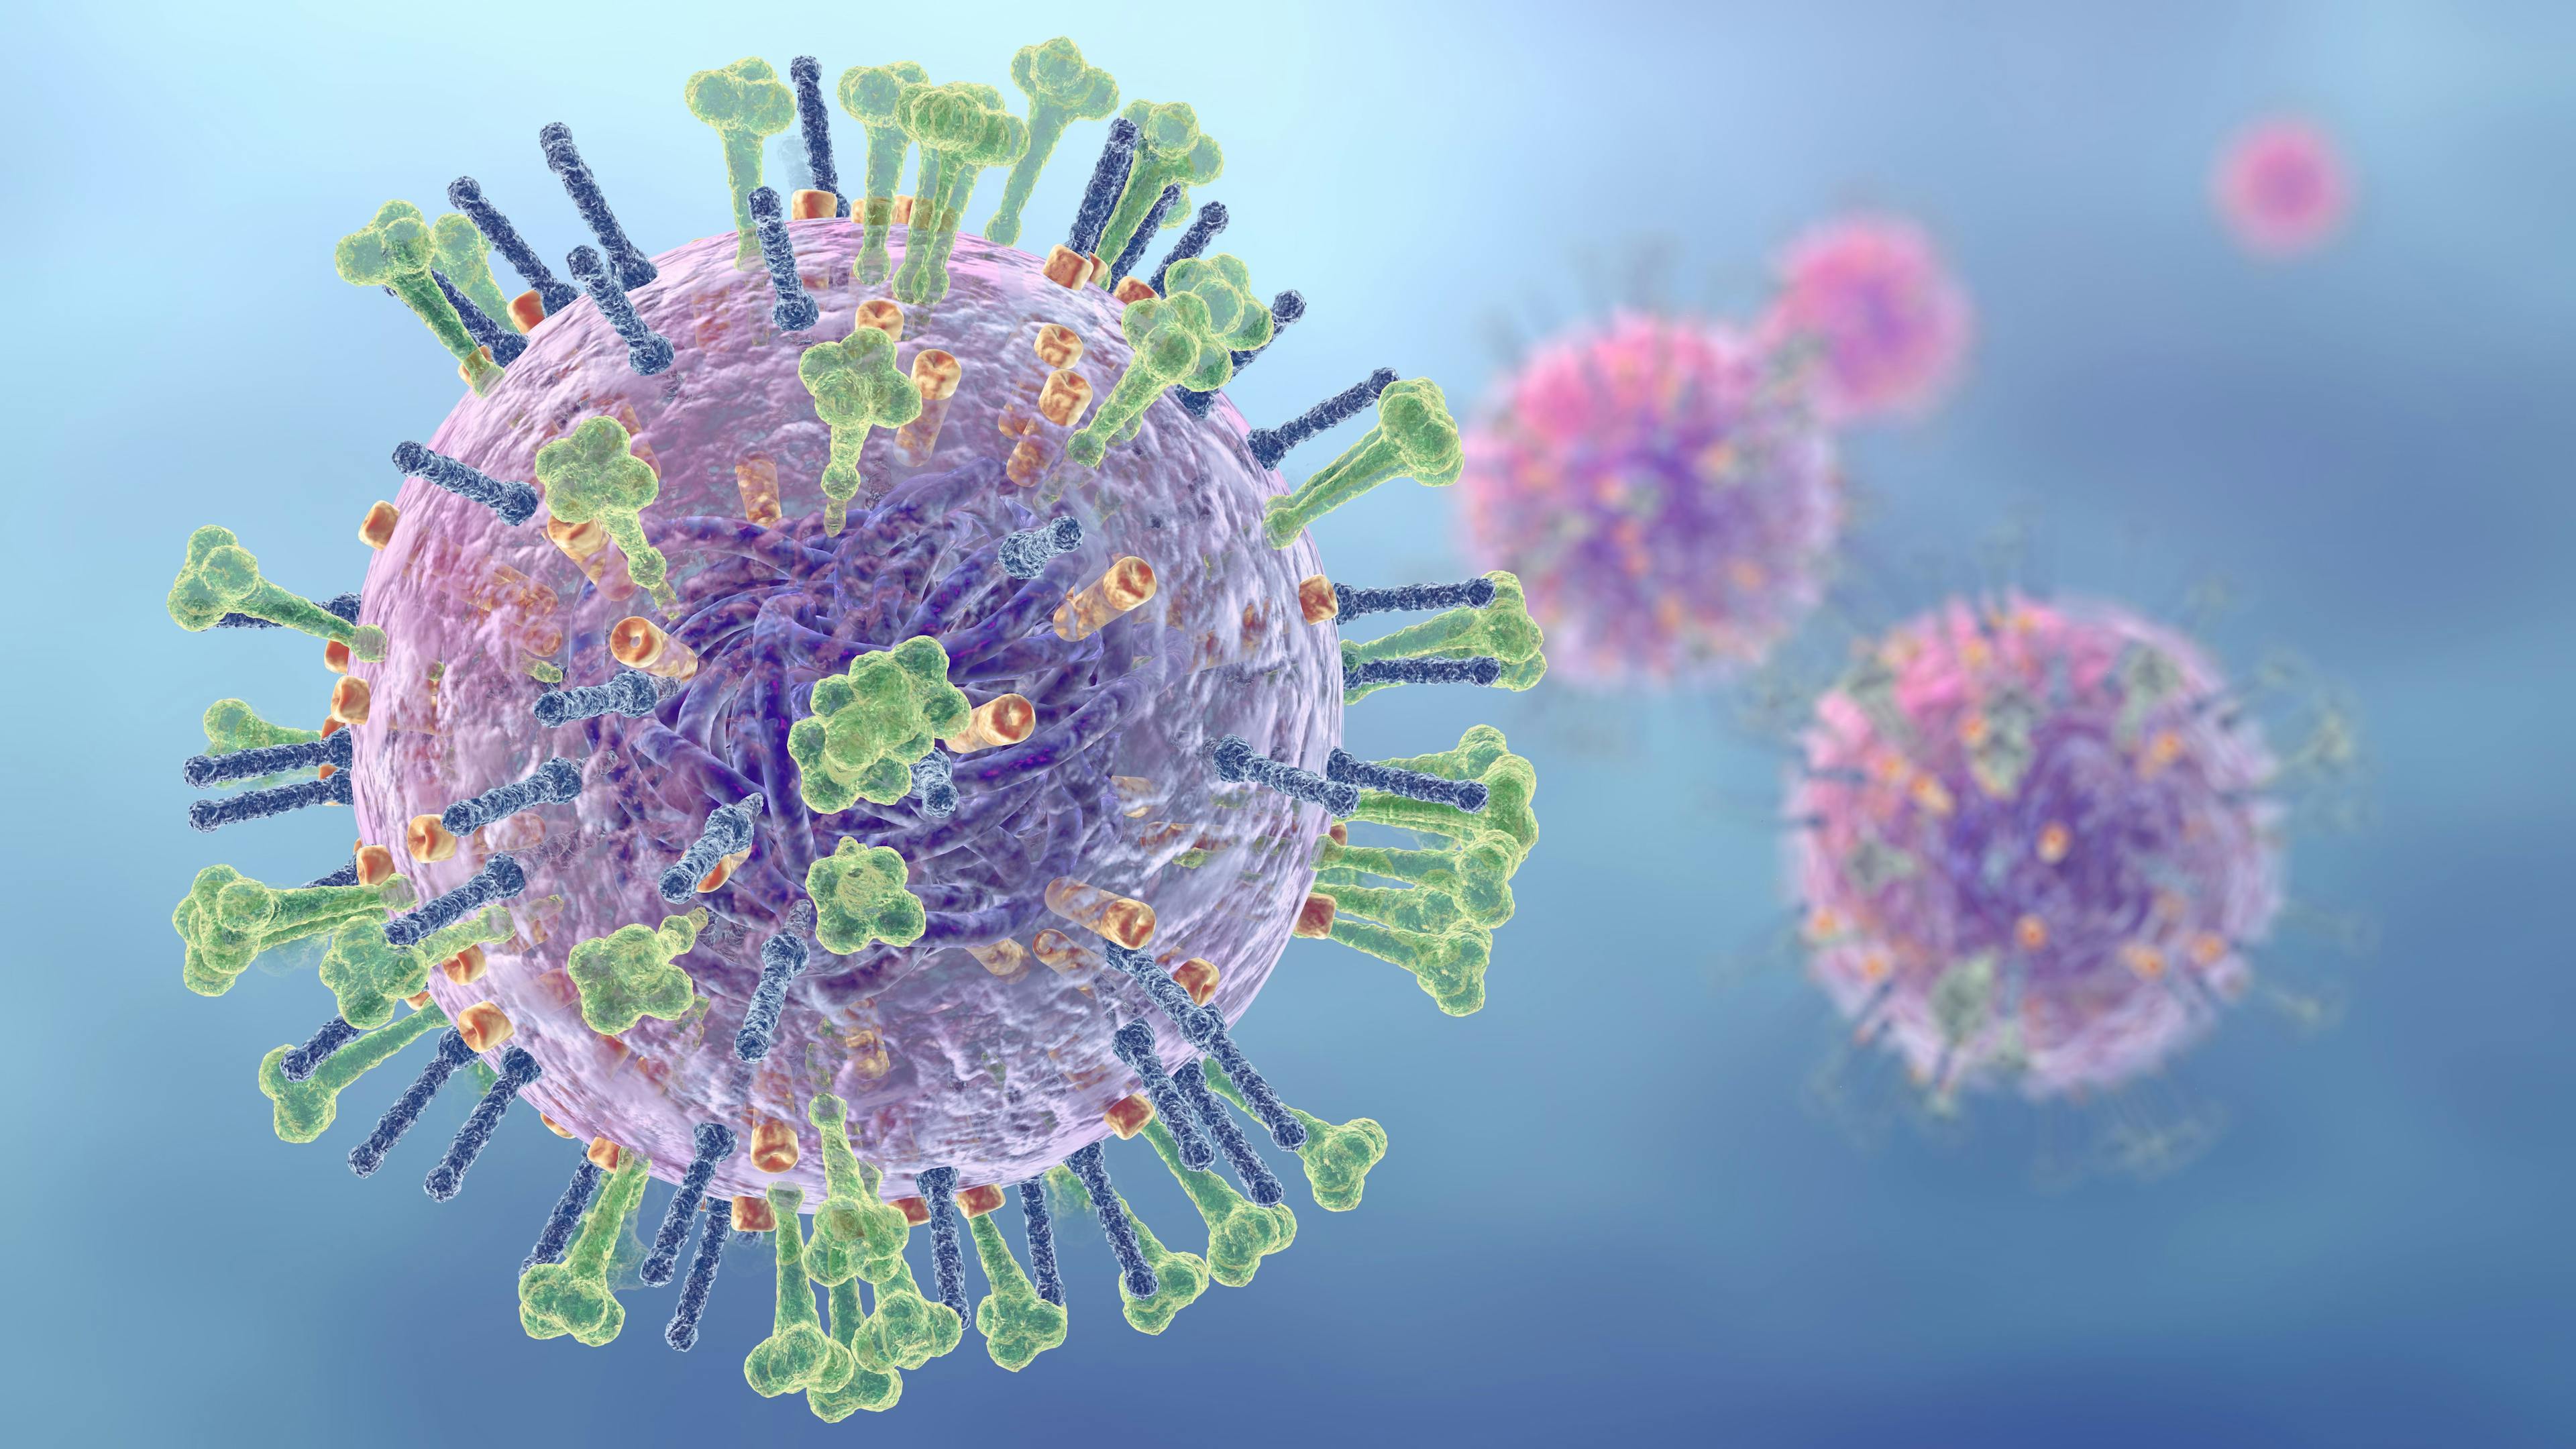 Illustration of the influenza virus.